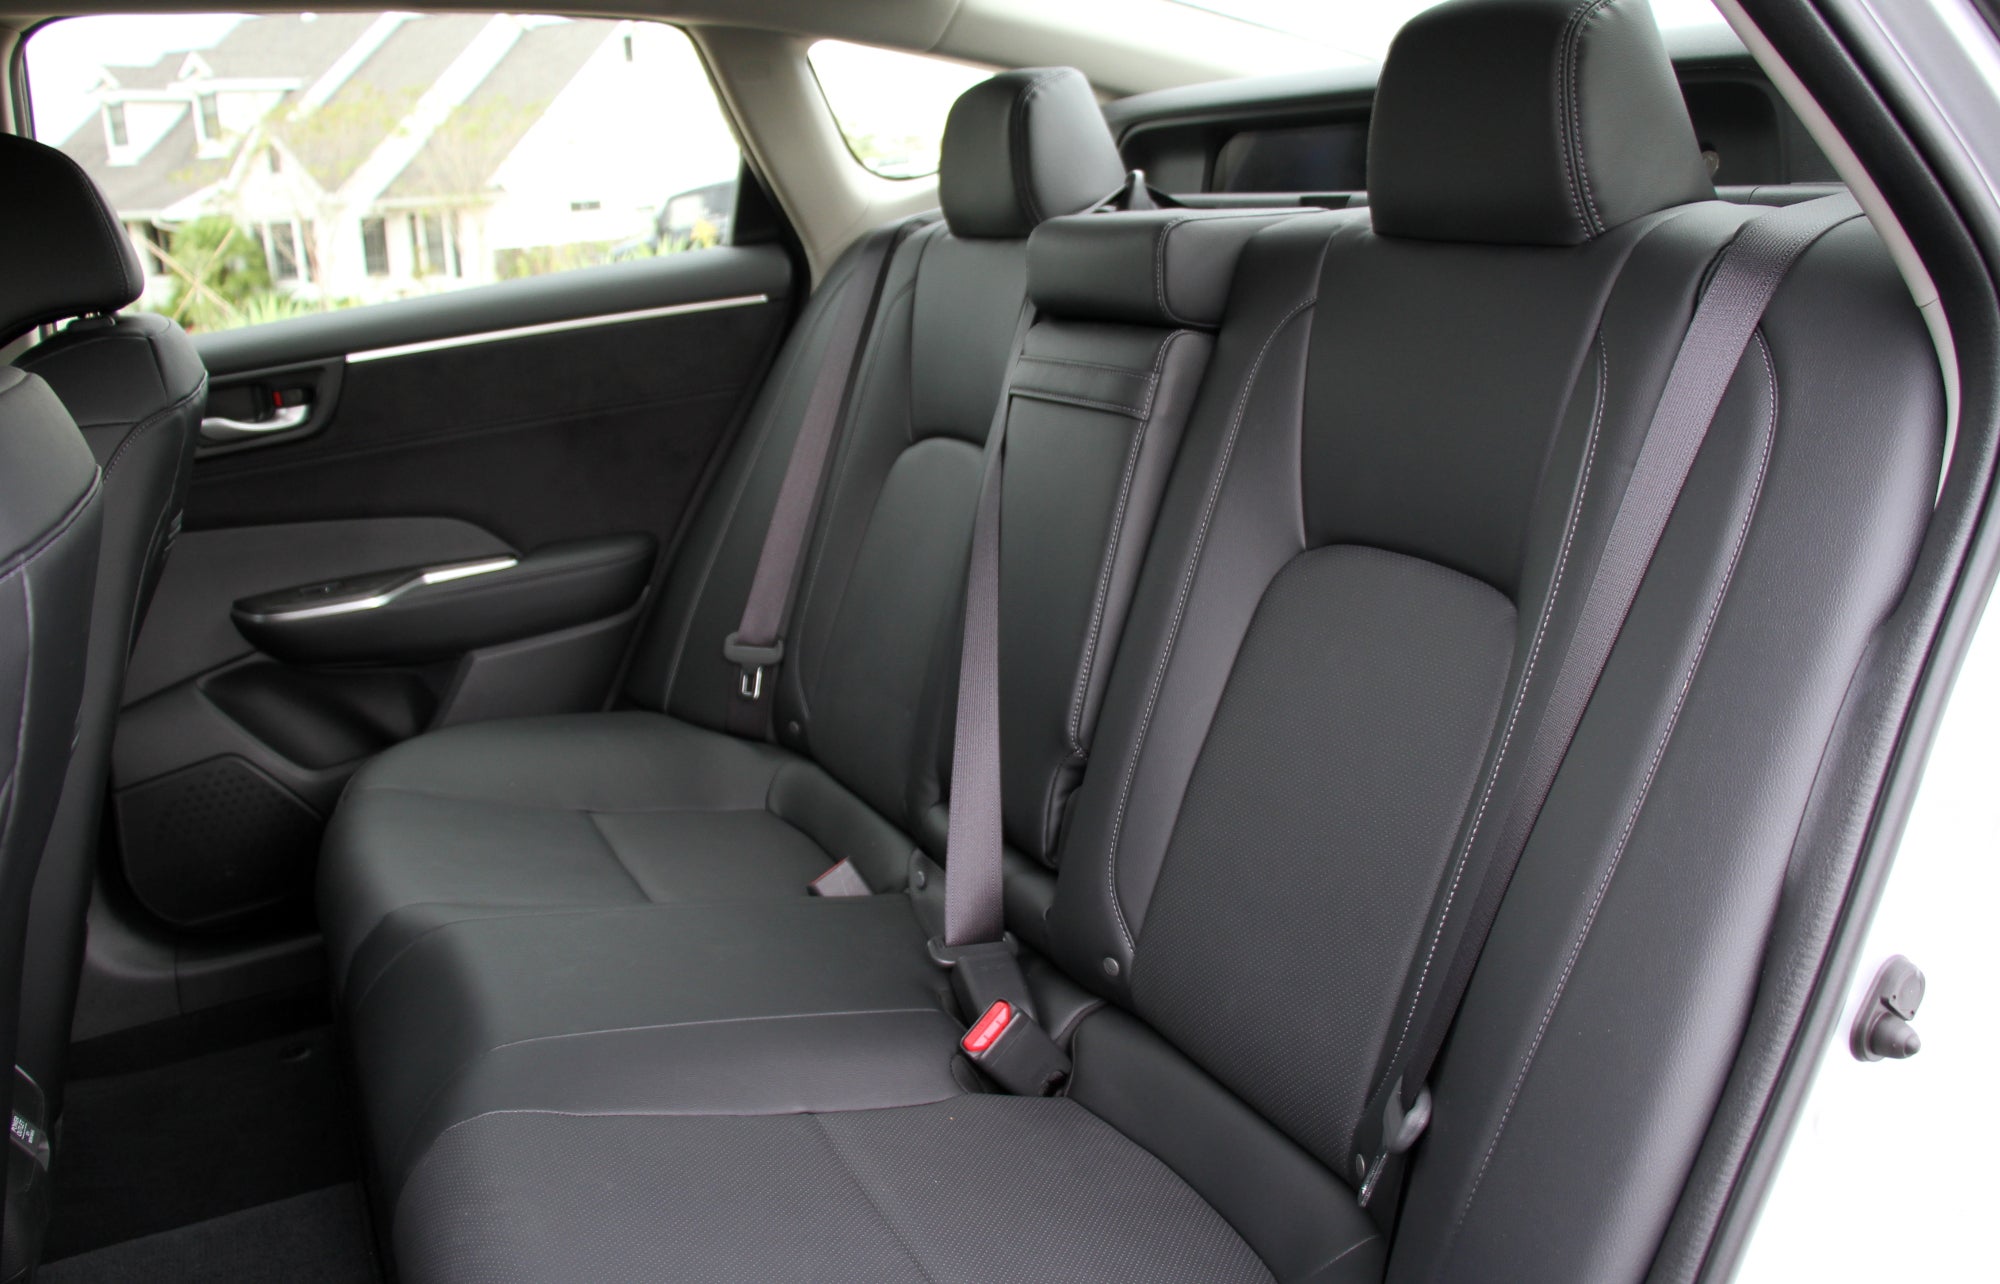 Honda Clarity back seat, <i>Stef Schrader</i>